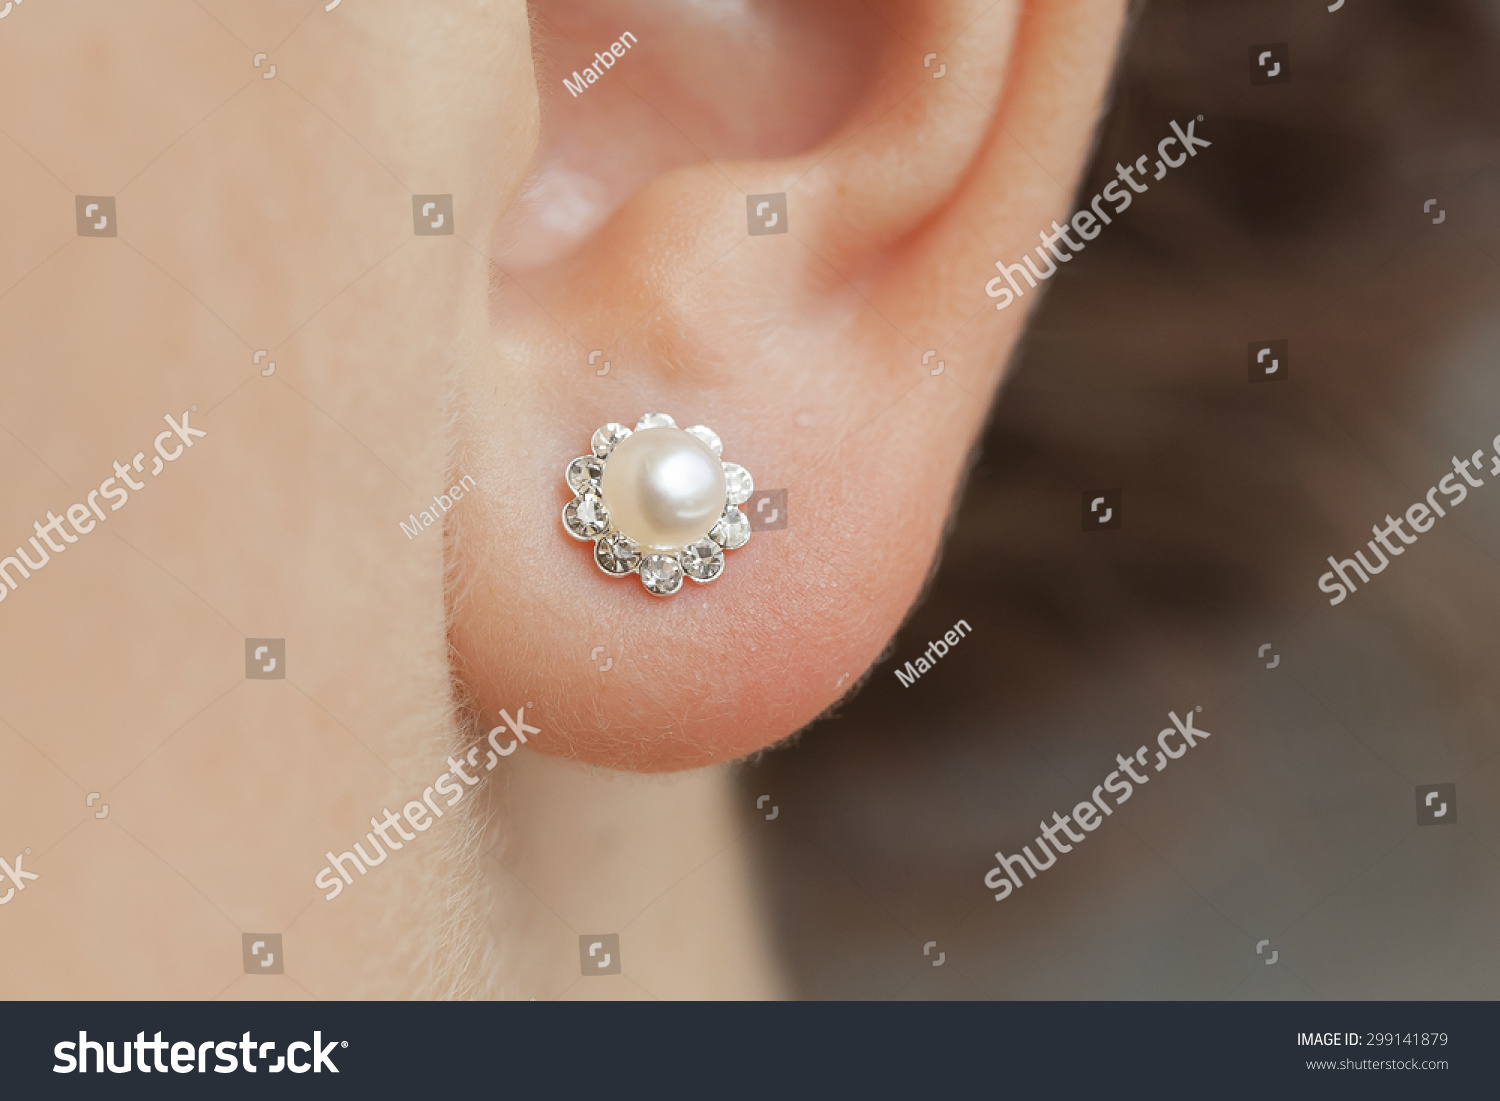 woman's ear with an earring #299141879